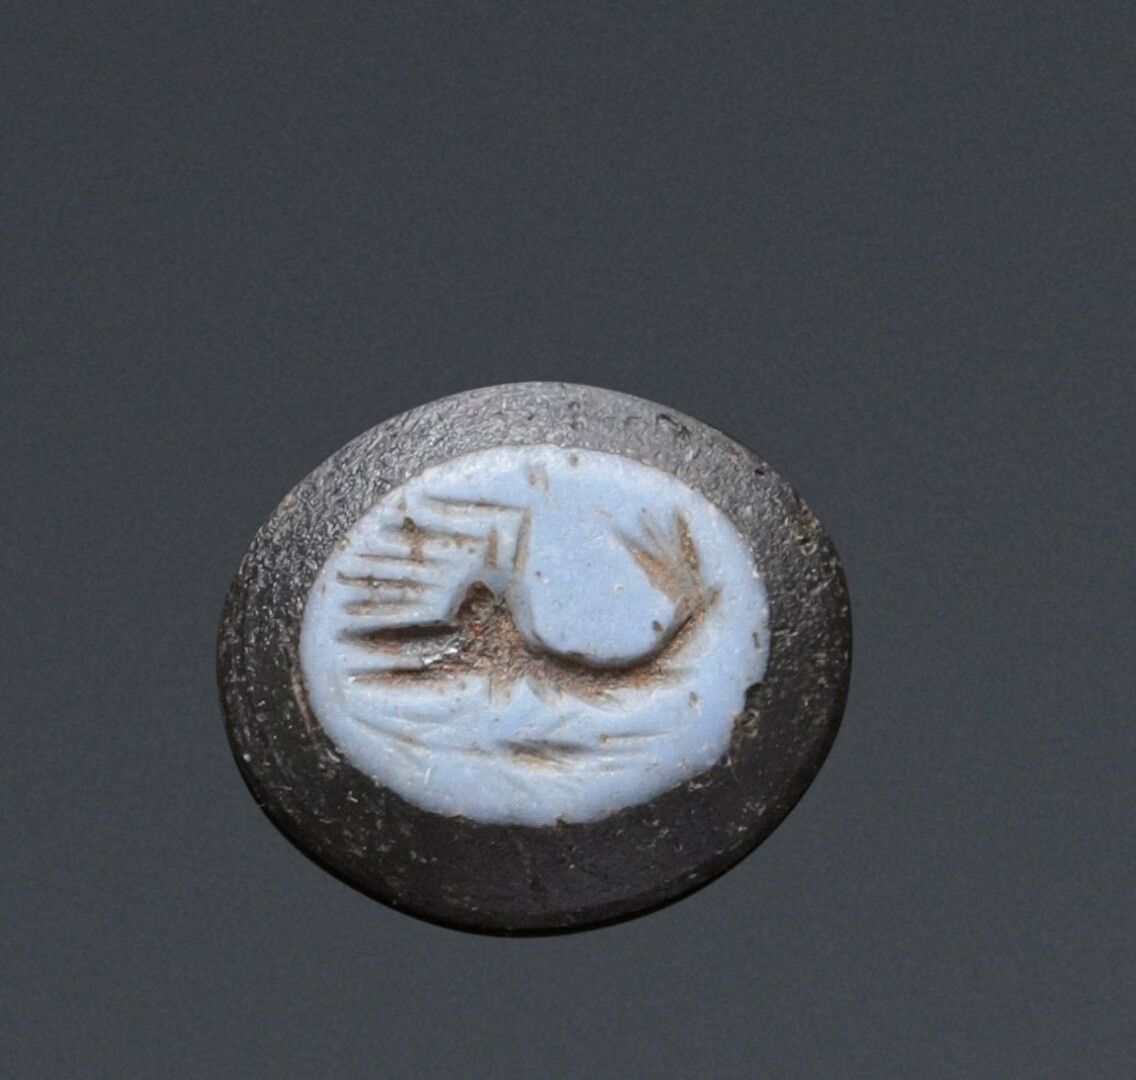 Null 平坦的椭圆形凹版上刻着一只虾和一穗麦子。蓝色和黑色的玻璃。

罗马艺术，2世纪。

0,8 x 1,4 cm